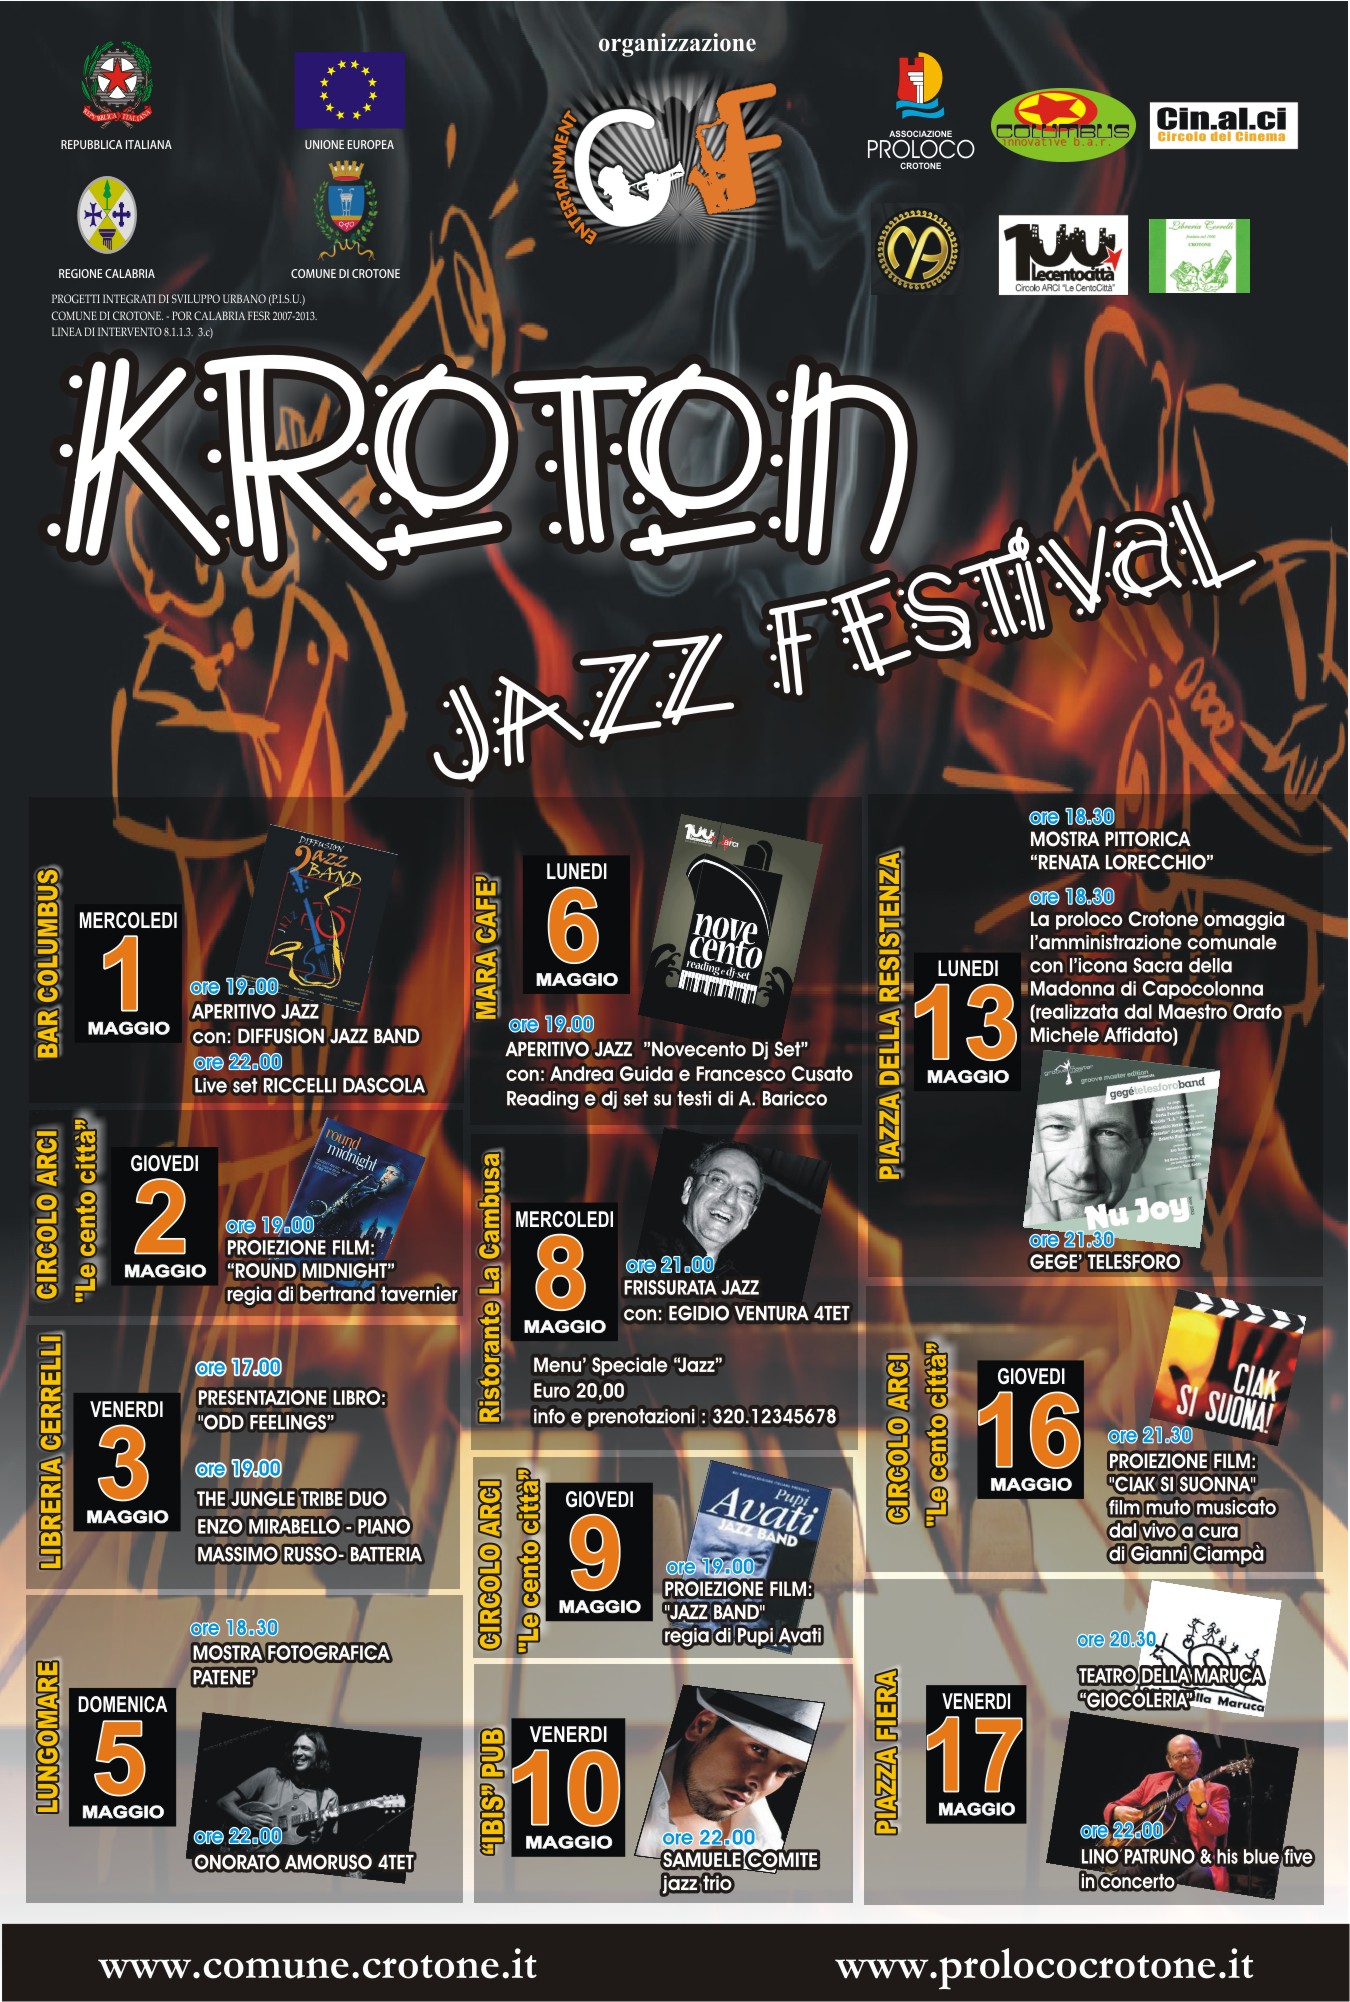 kroton-jazz-festival